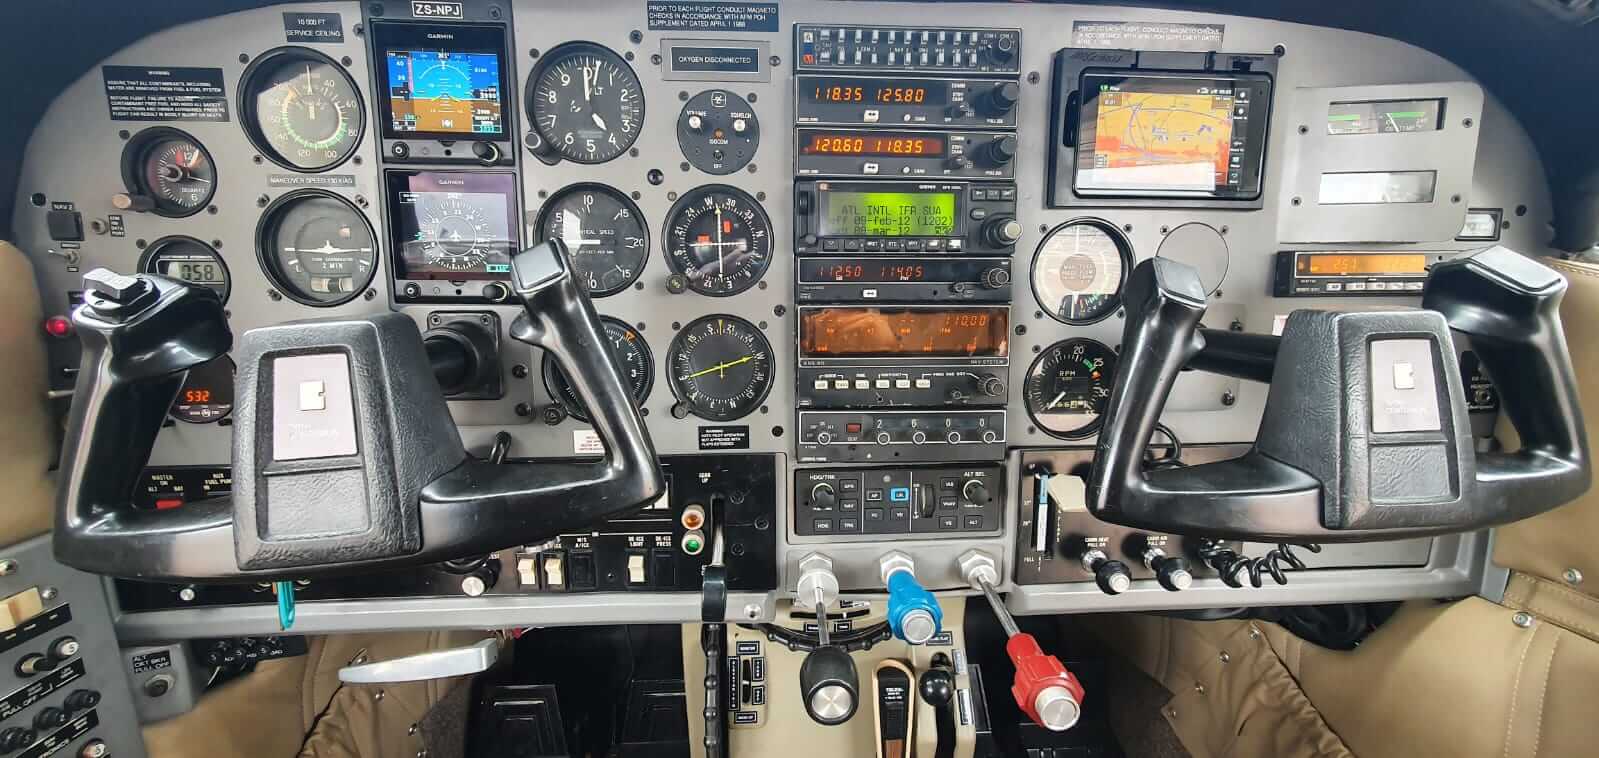 Install Dual G5's, GFC500 Autopilot and Panel Refurbishment on a Cessna 210.